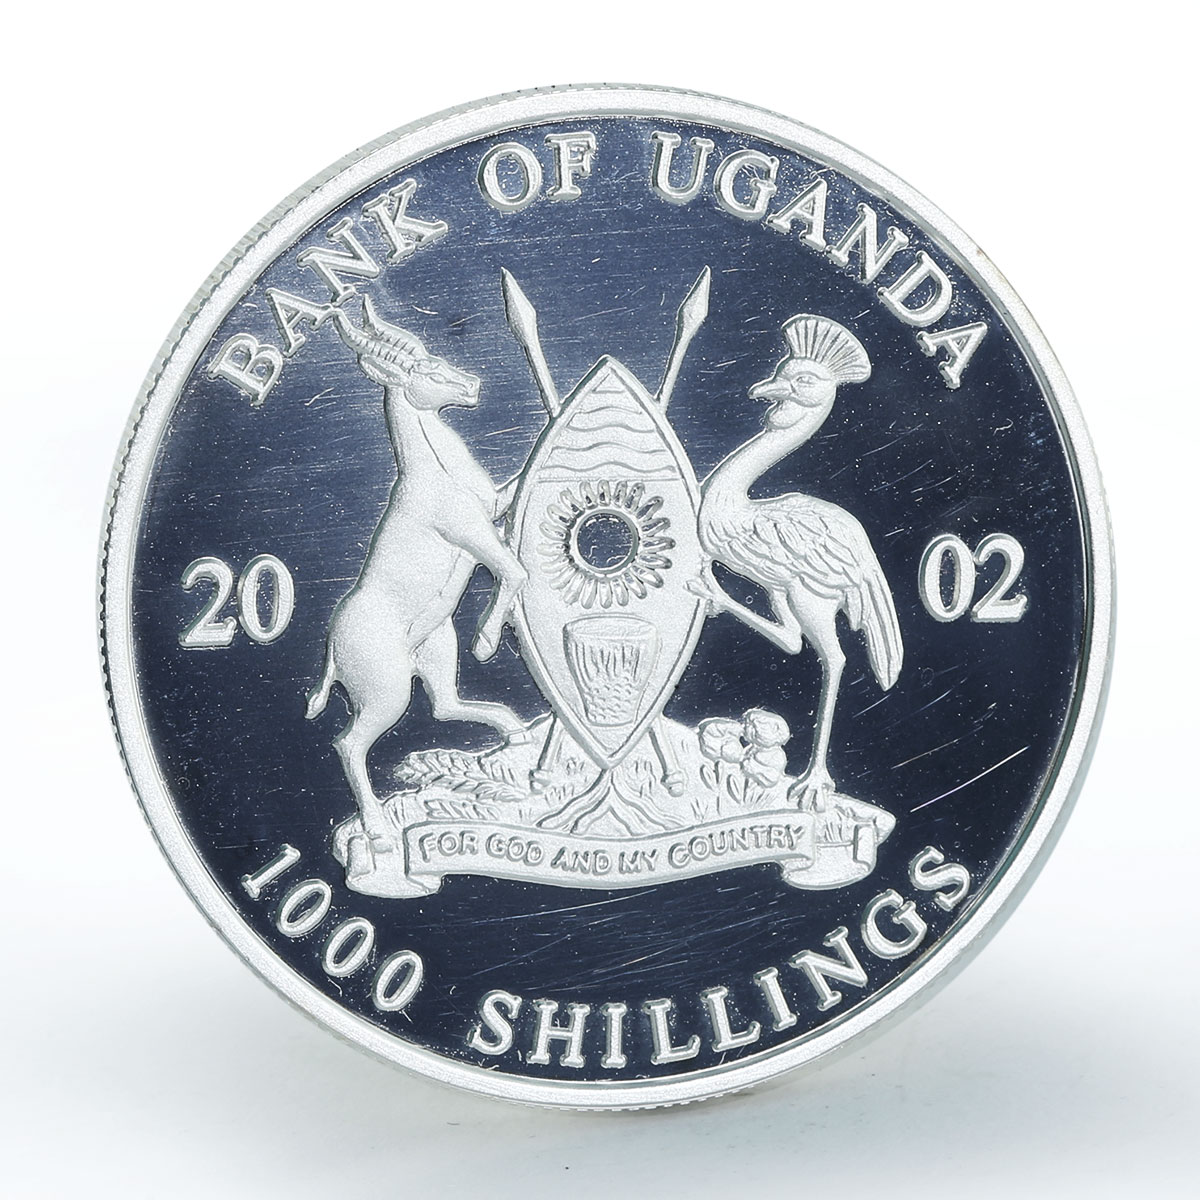 Uganda 1000 shillings World of Football proof silver coin 2002